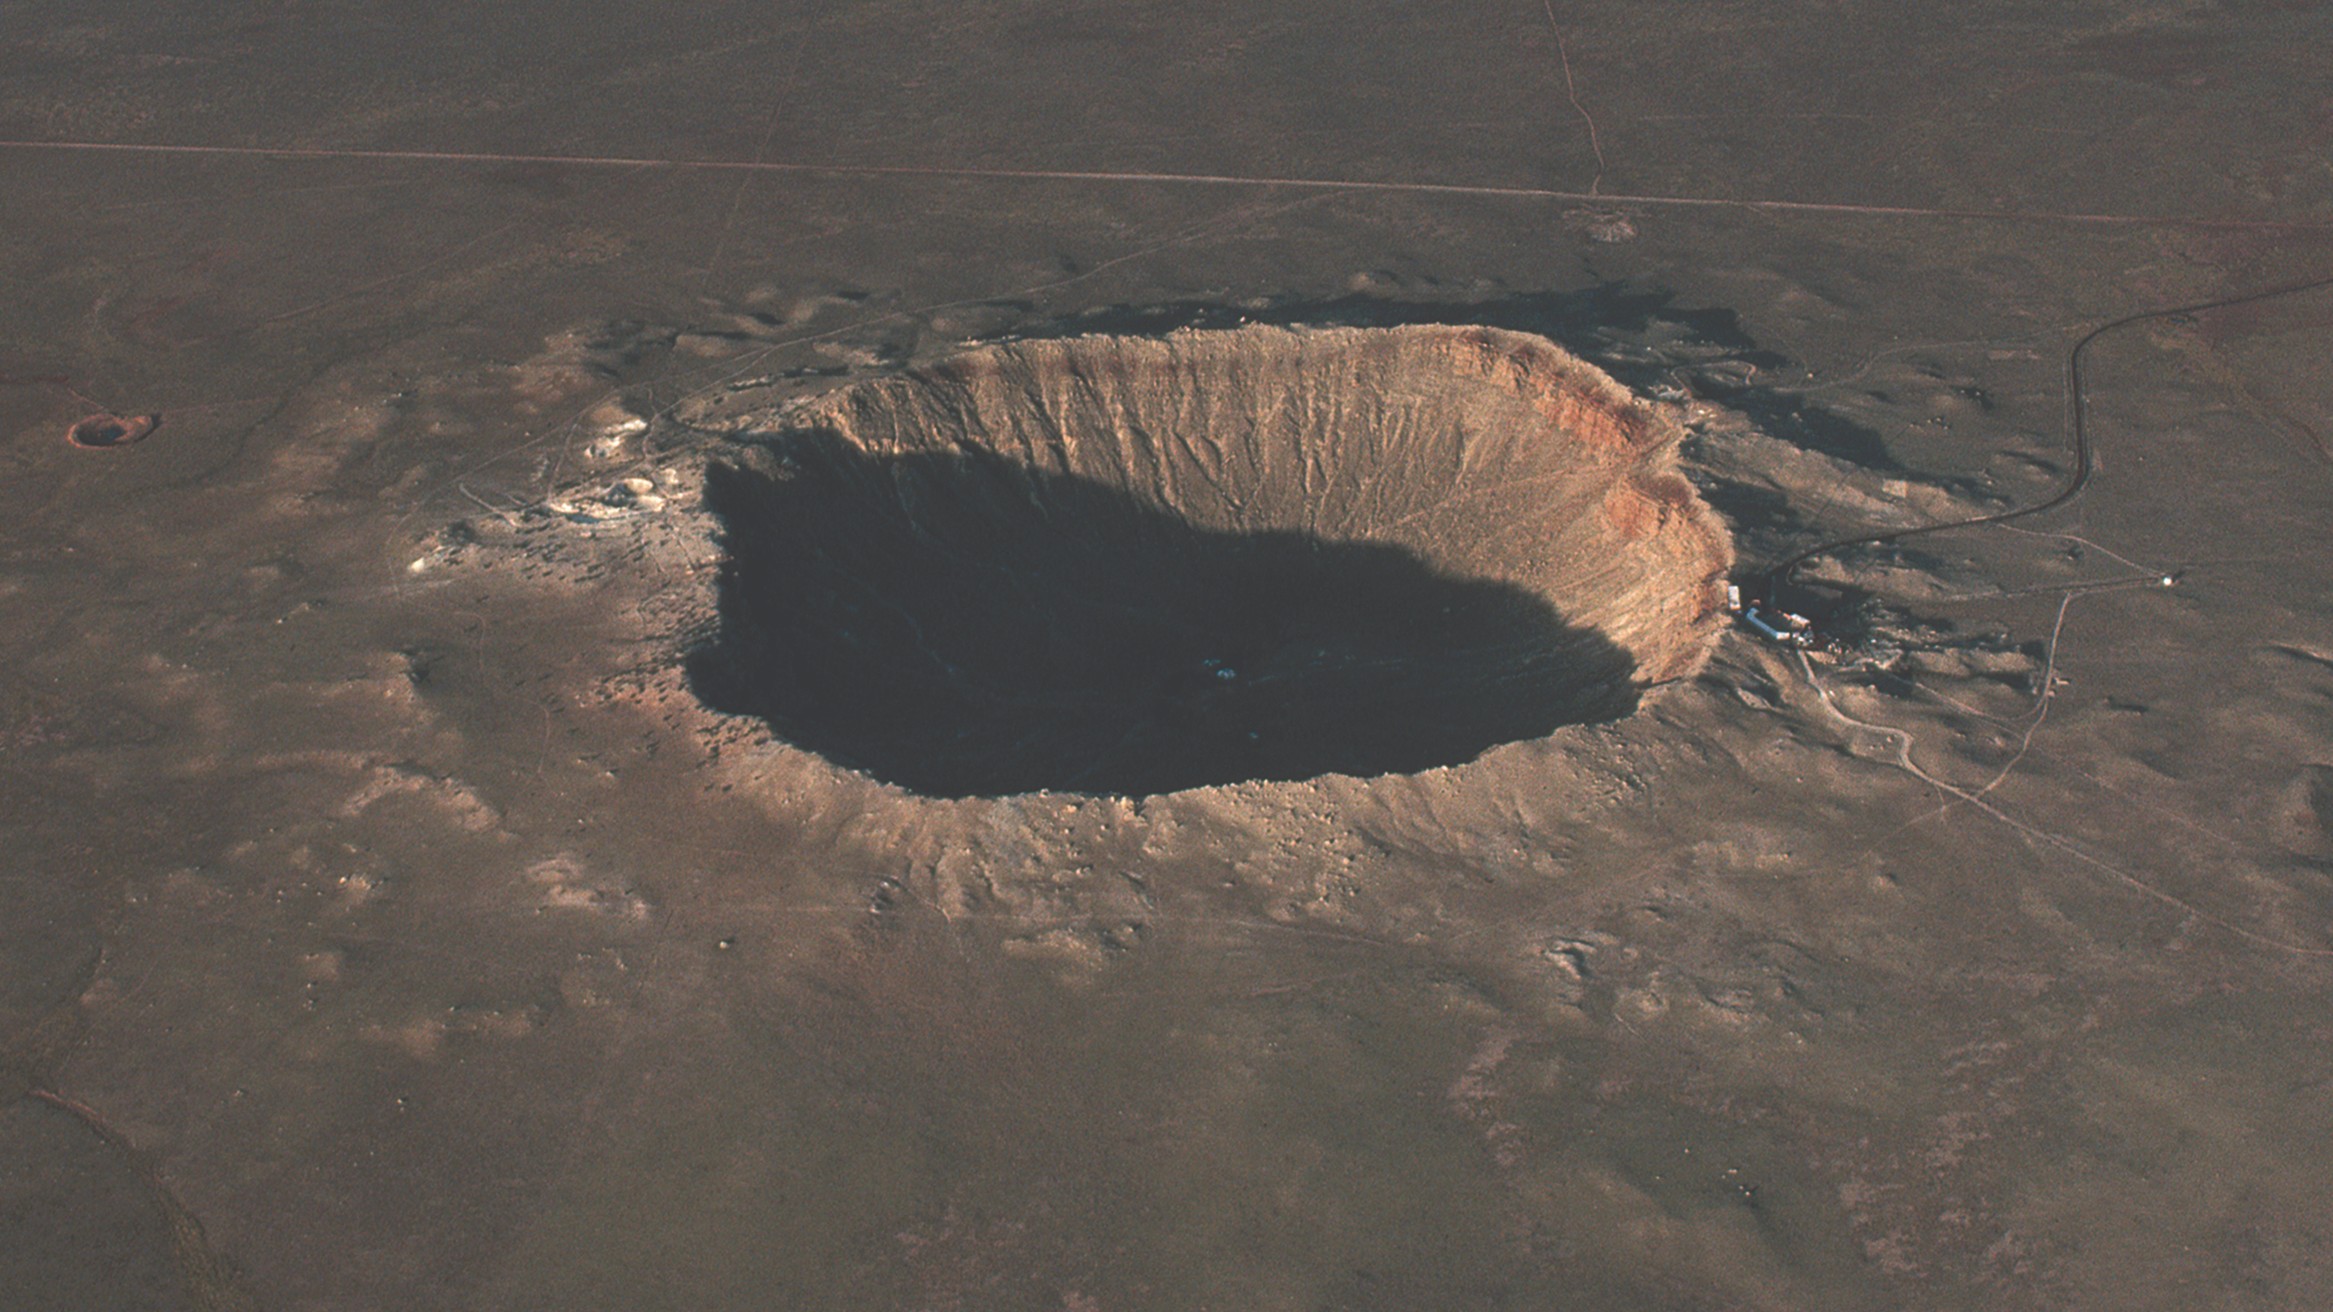 The impact crater of the Diablo meteorite